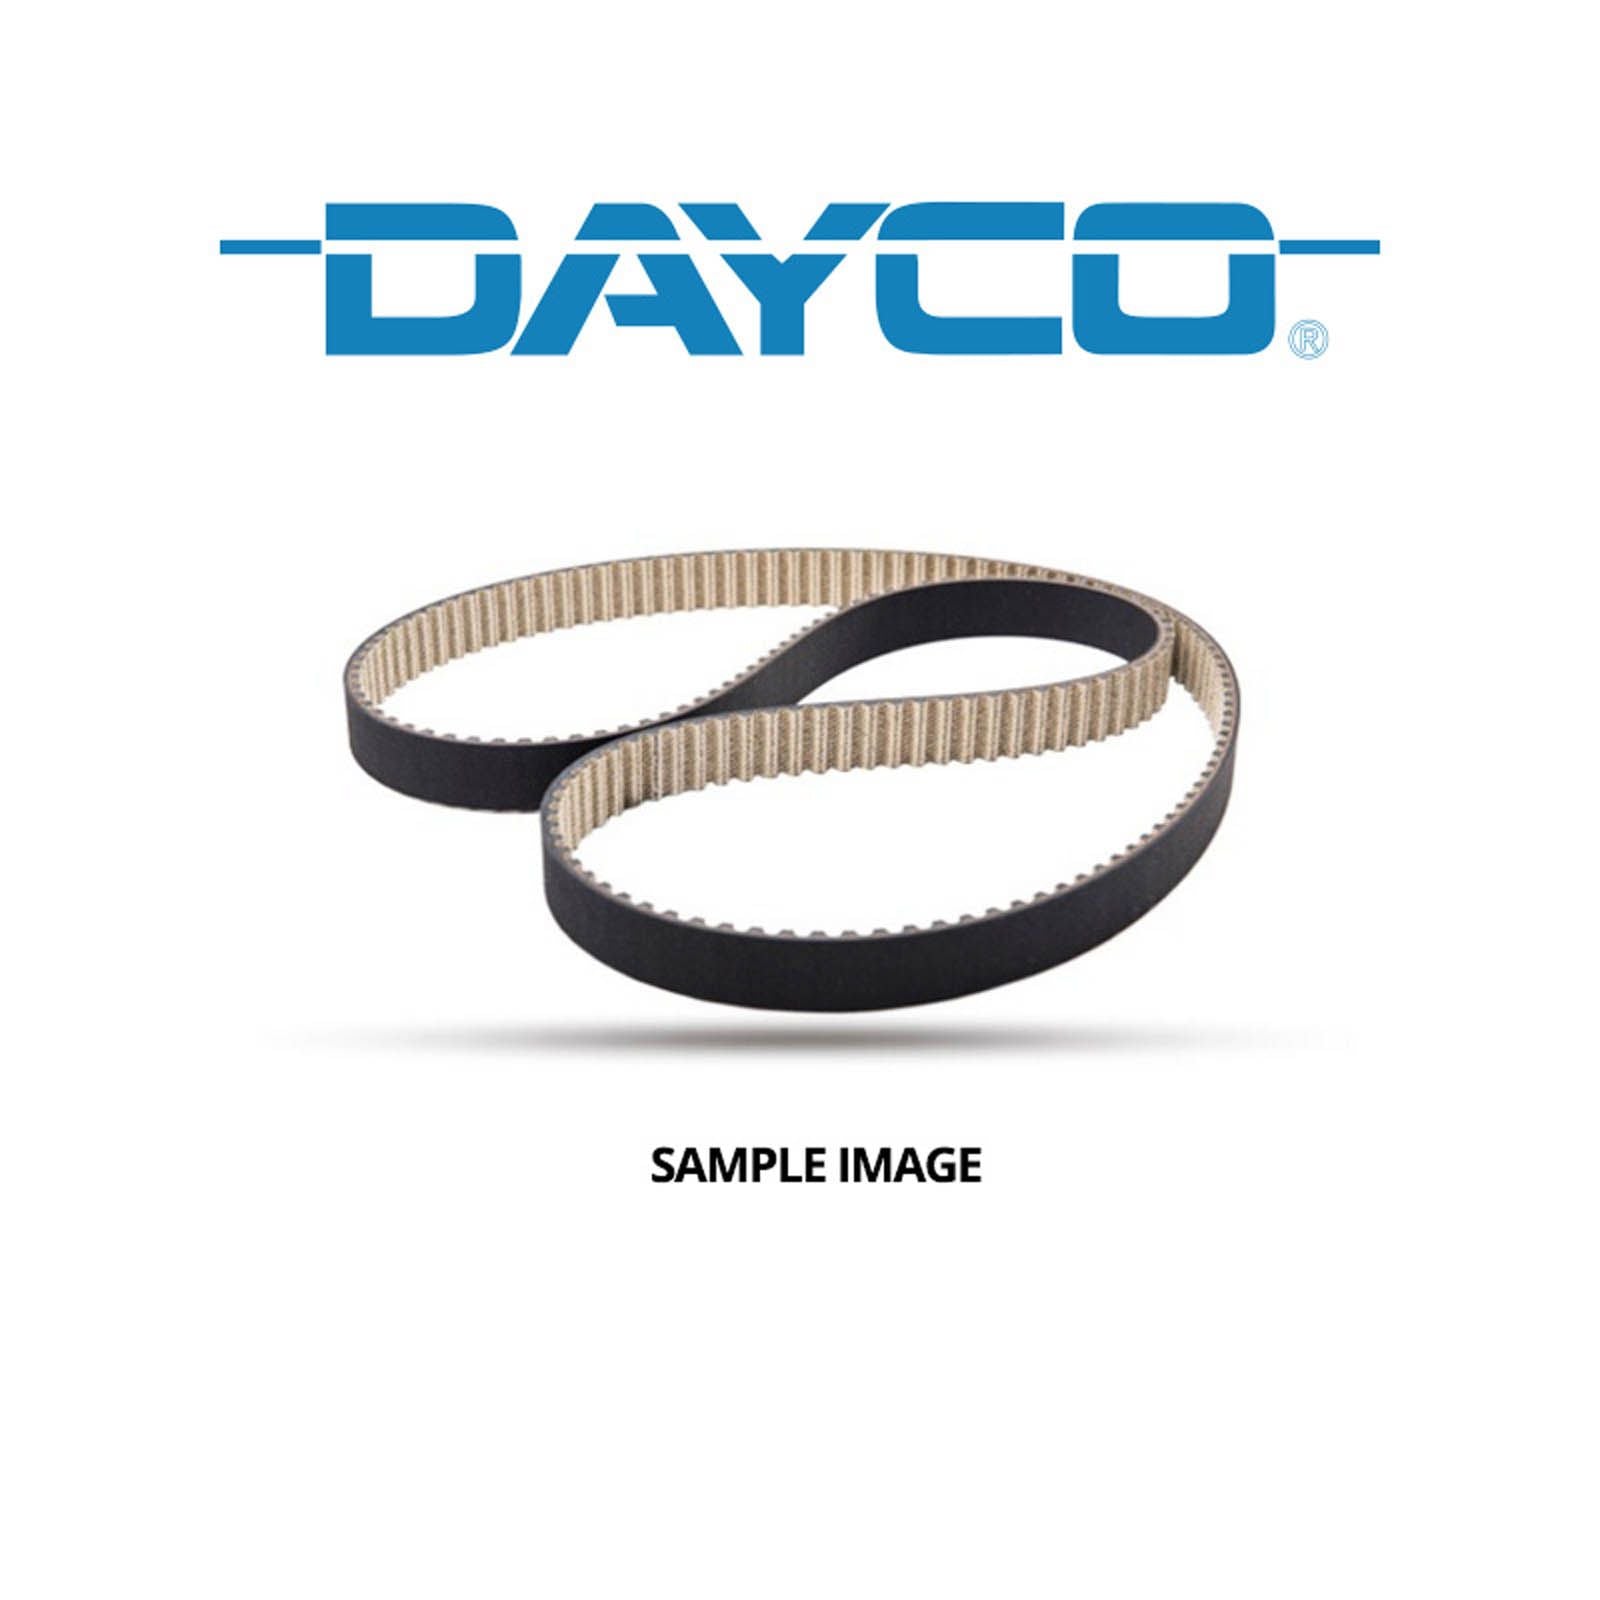 New DAYCO ATV Drive Belt HP 28.5 X 848 HP2017 #ATVDBHP2017